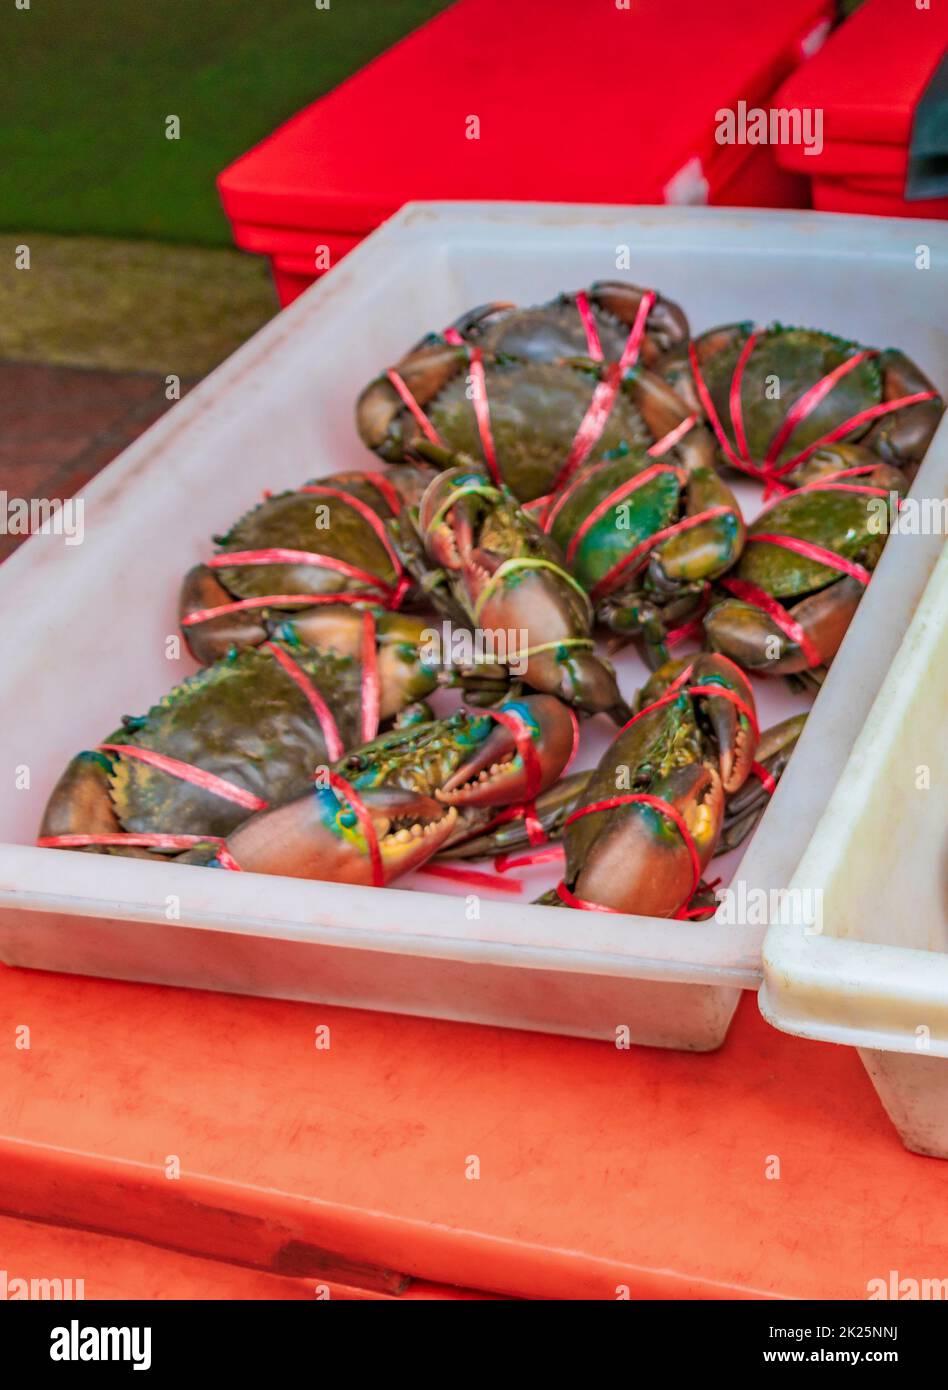 Seafood live crabs shellfish crustaceans Thai market China Town Bangkok. Stock Photo